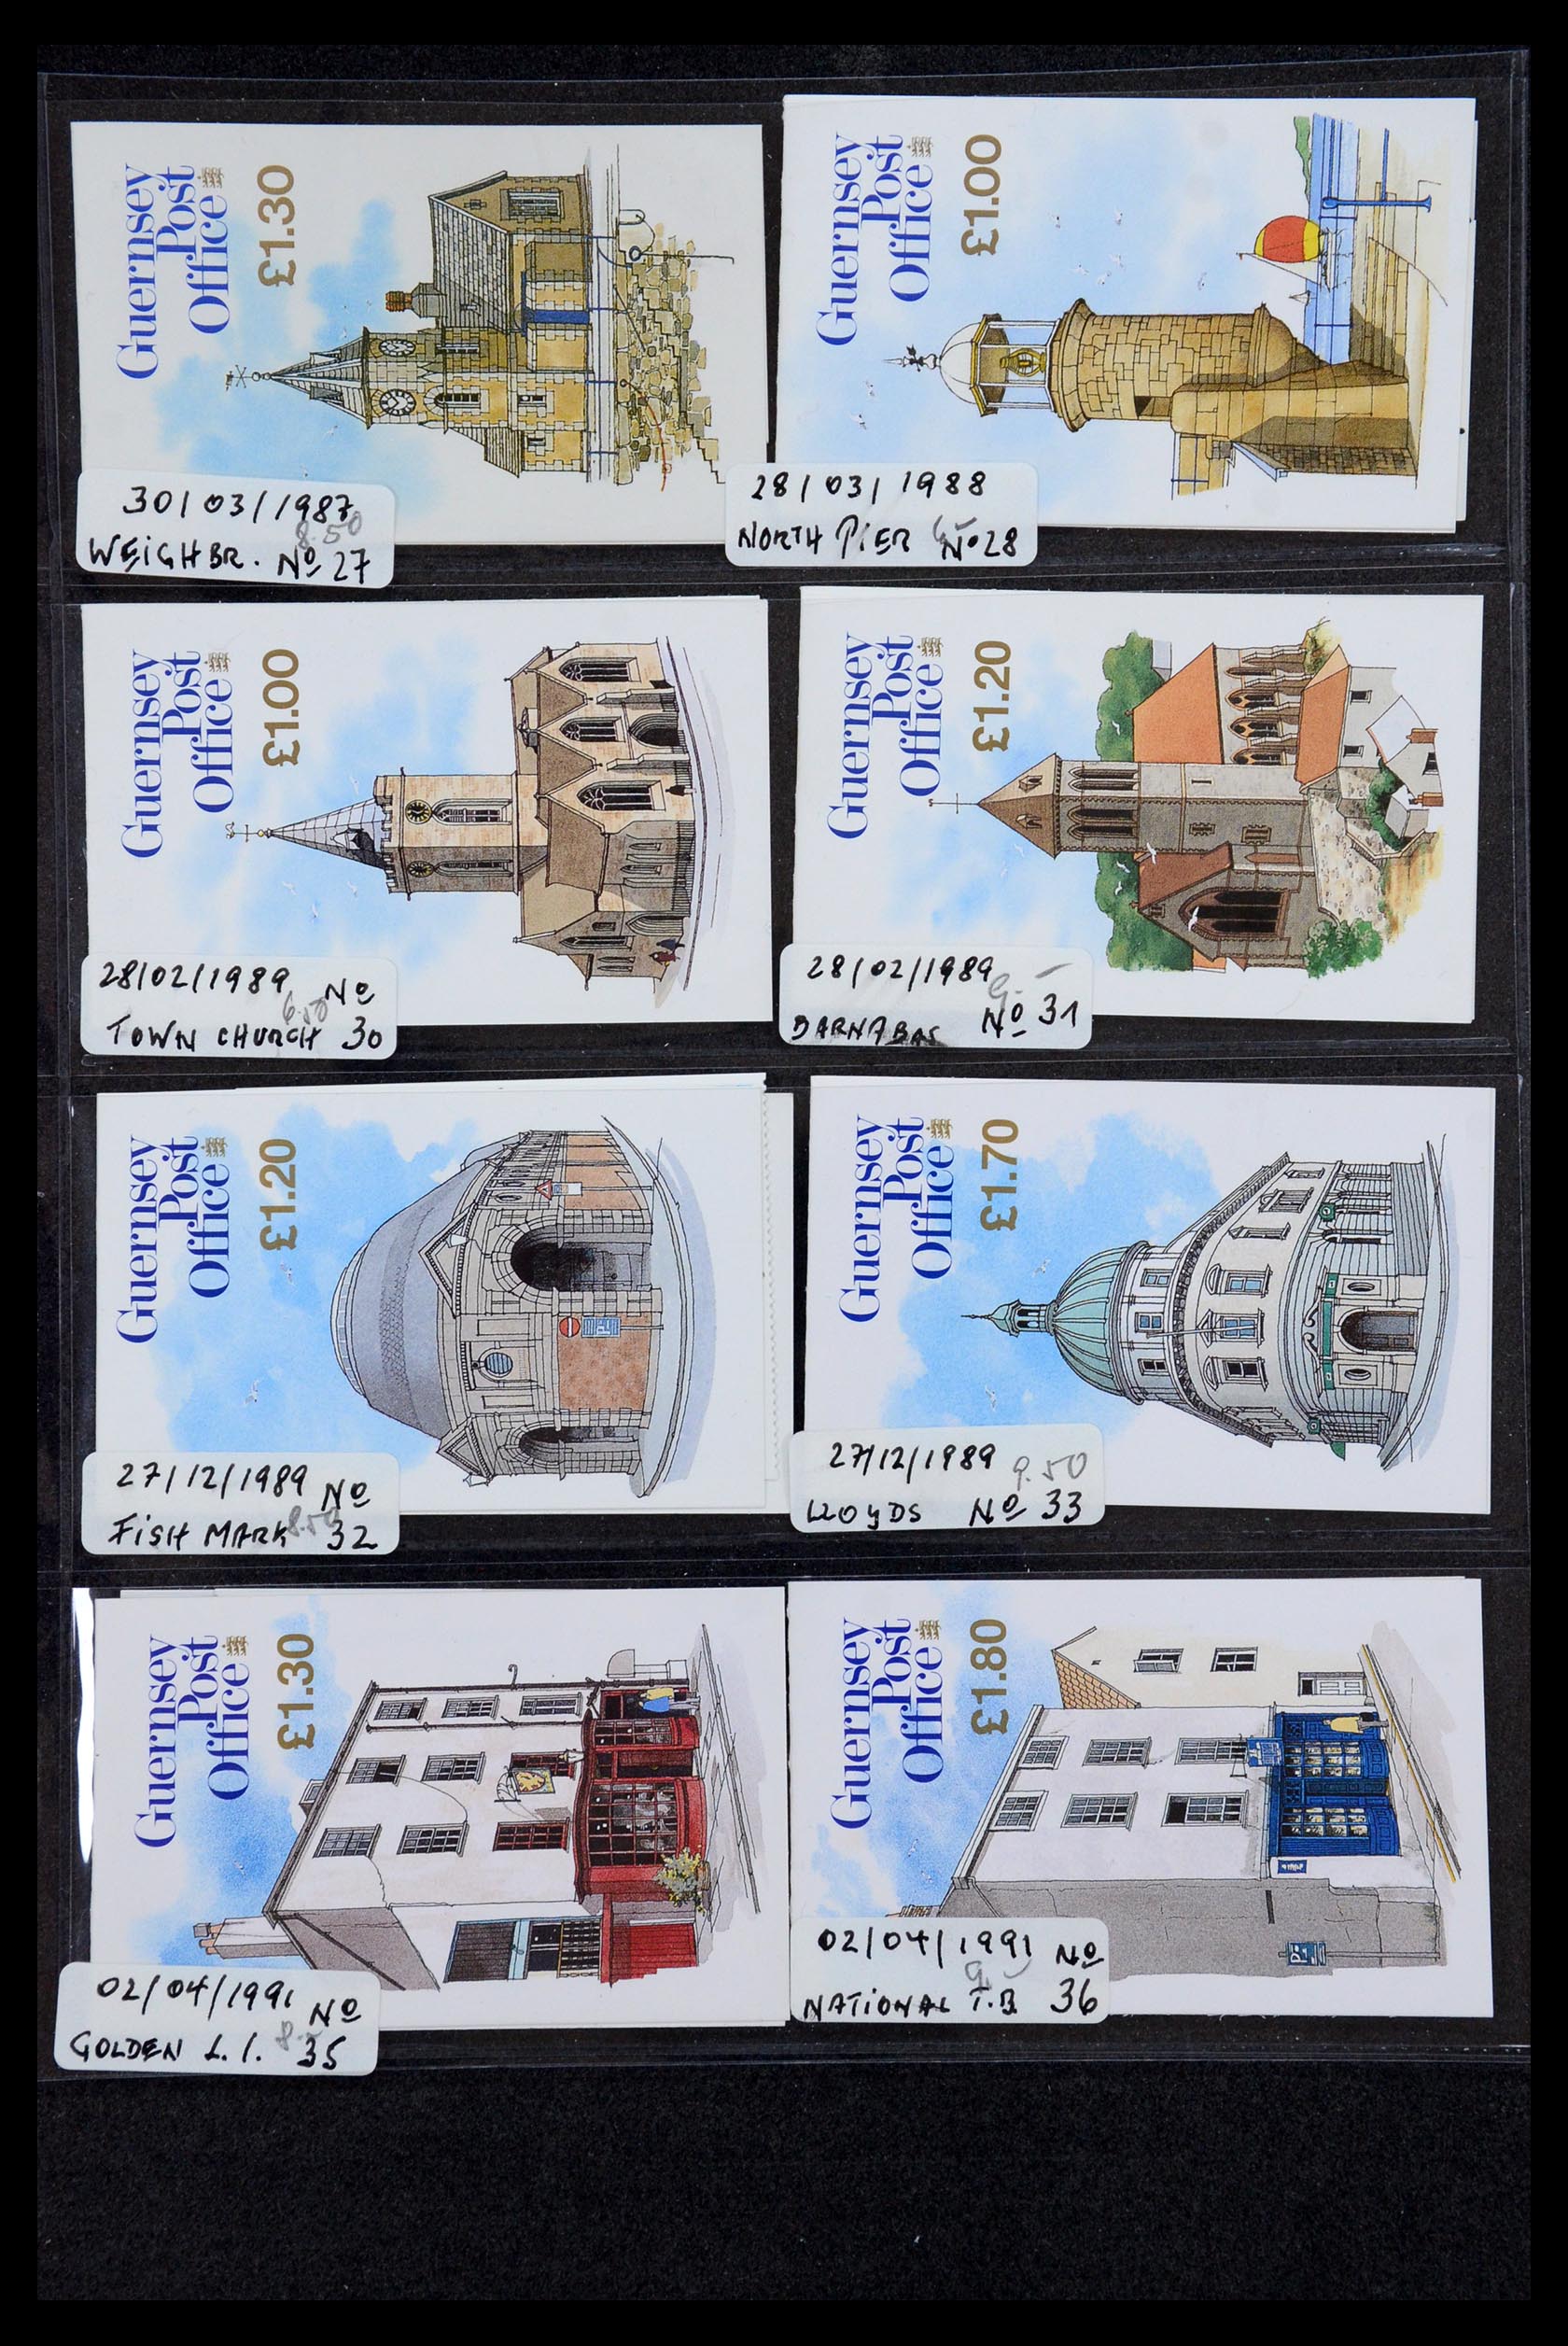 35976 010 - Stamp collection 35976 Guernsey and Alderney stamp booklets 1969-2015!